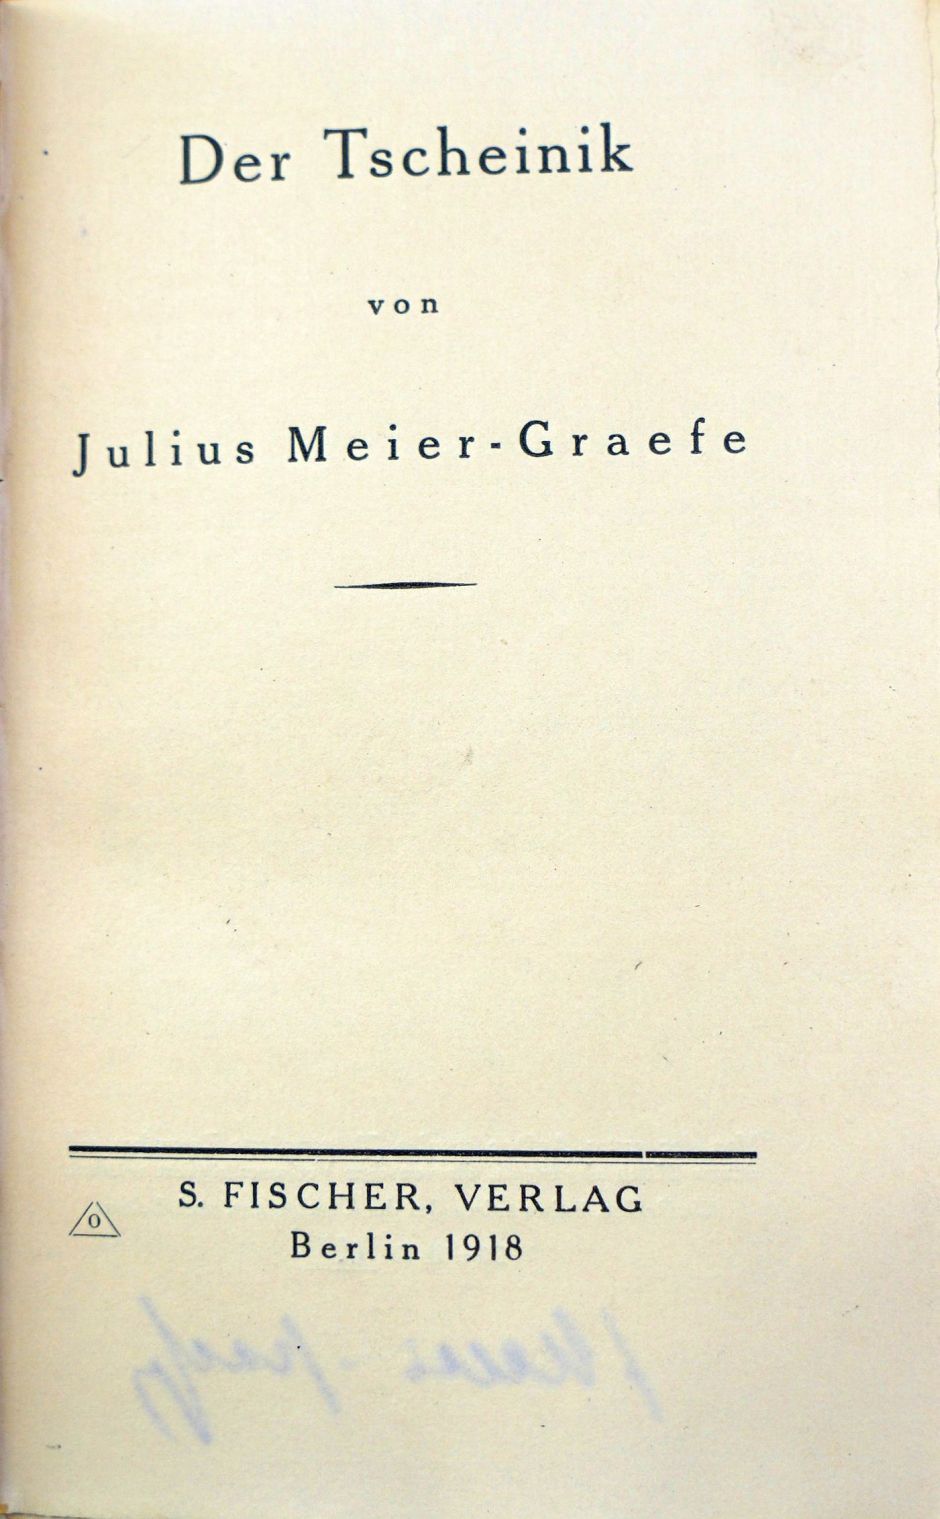 Lot 3306, Auction  115, Meier-Graefe, Julius, Der Tscheinik